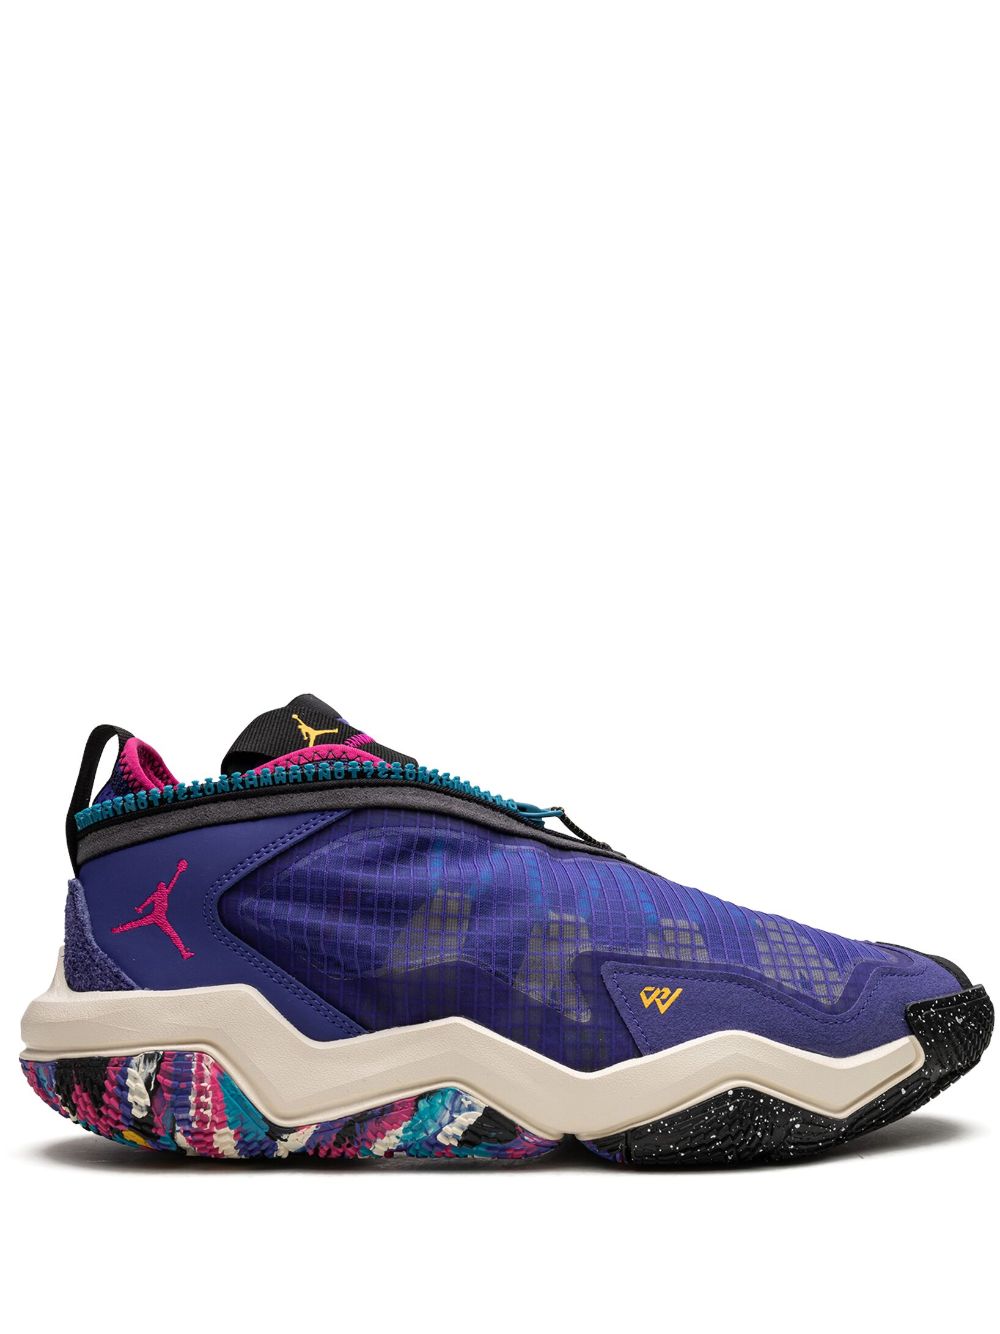 Jordan Why Not Zer0.6 "Bright Concord" sneakers - Purple